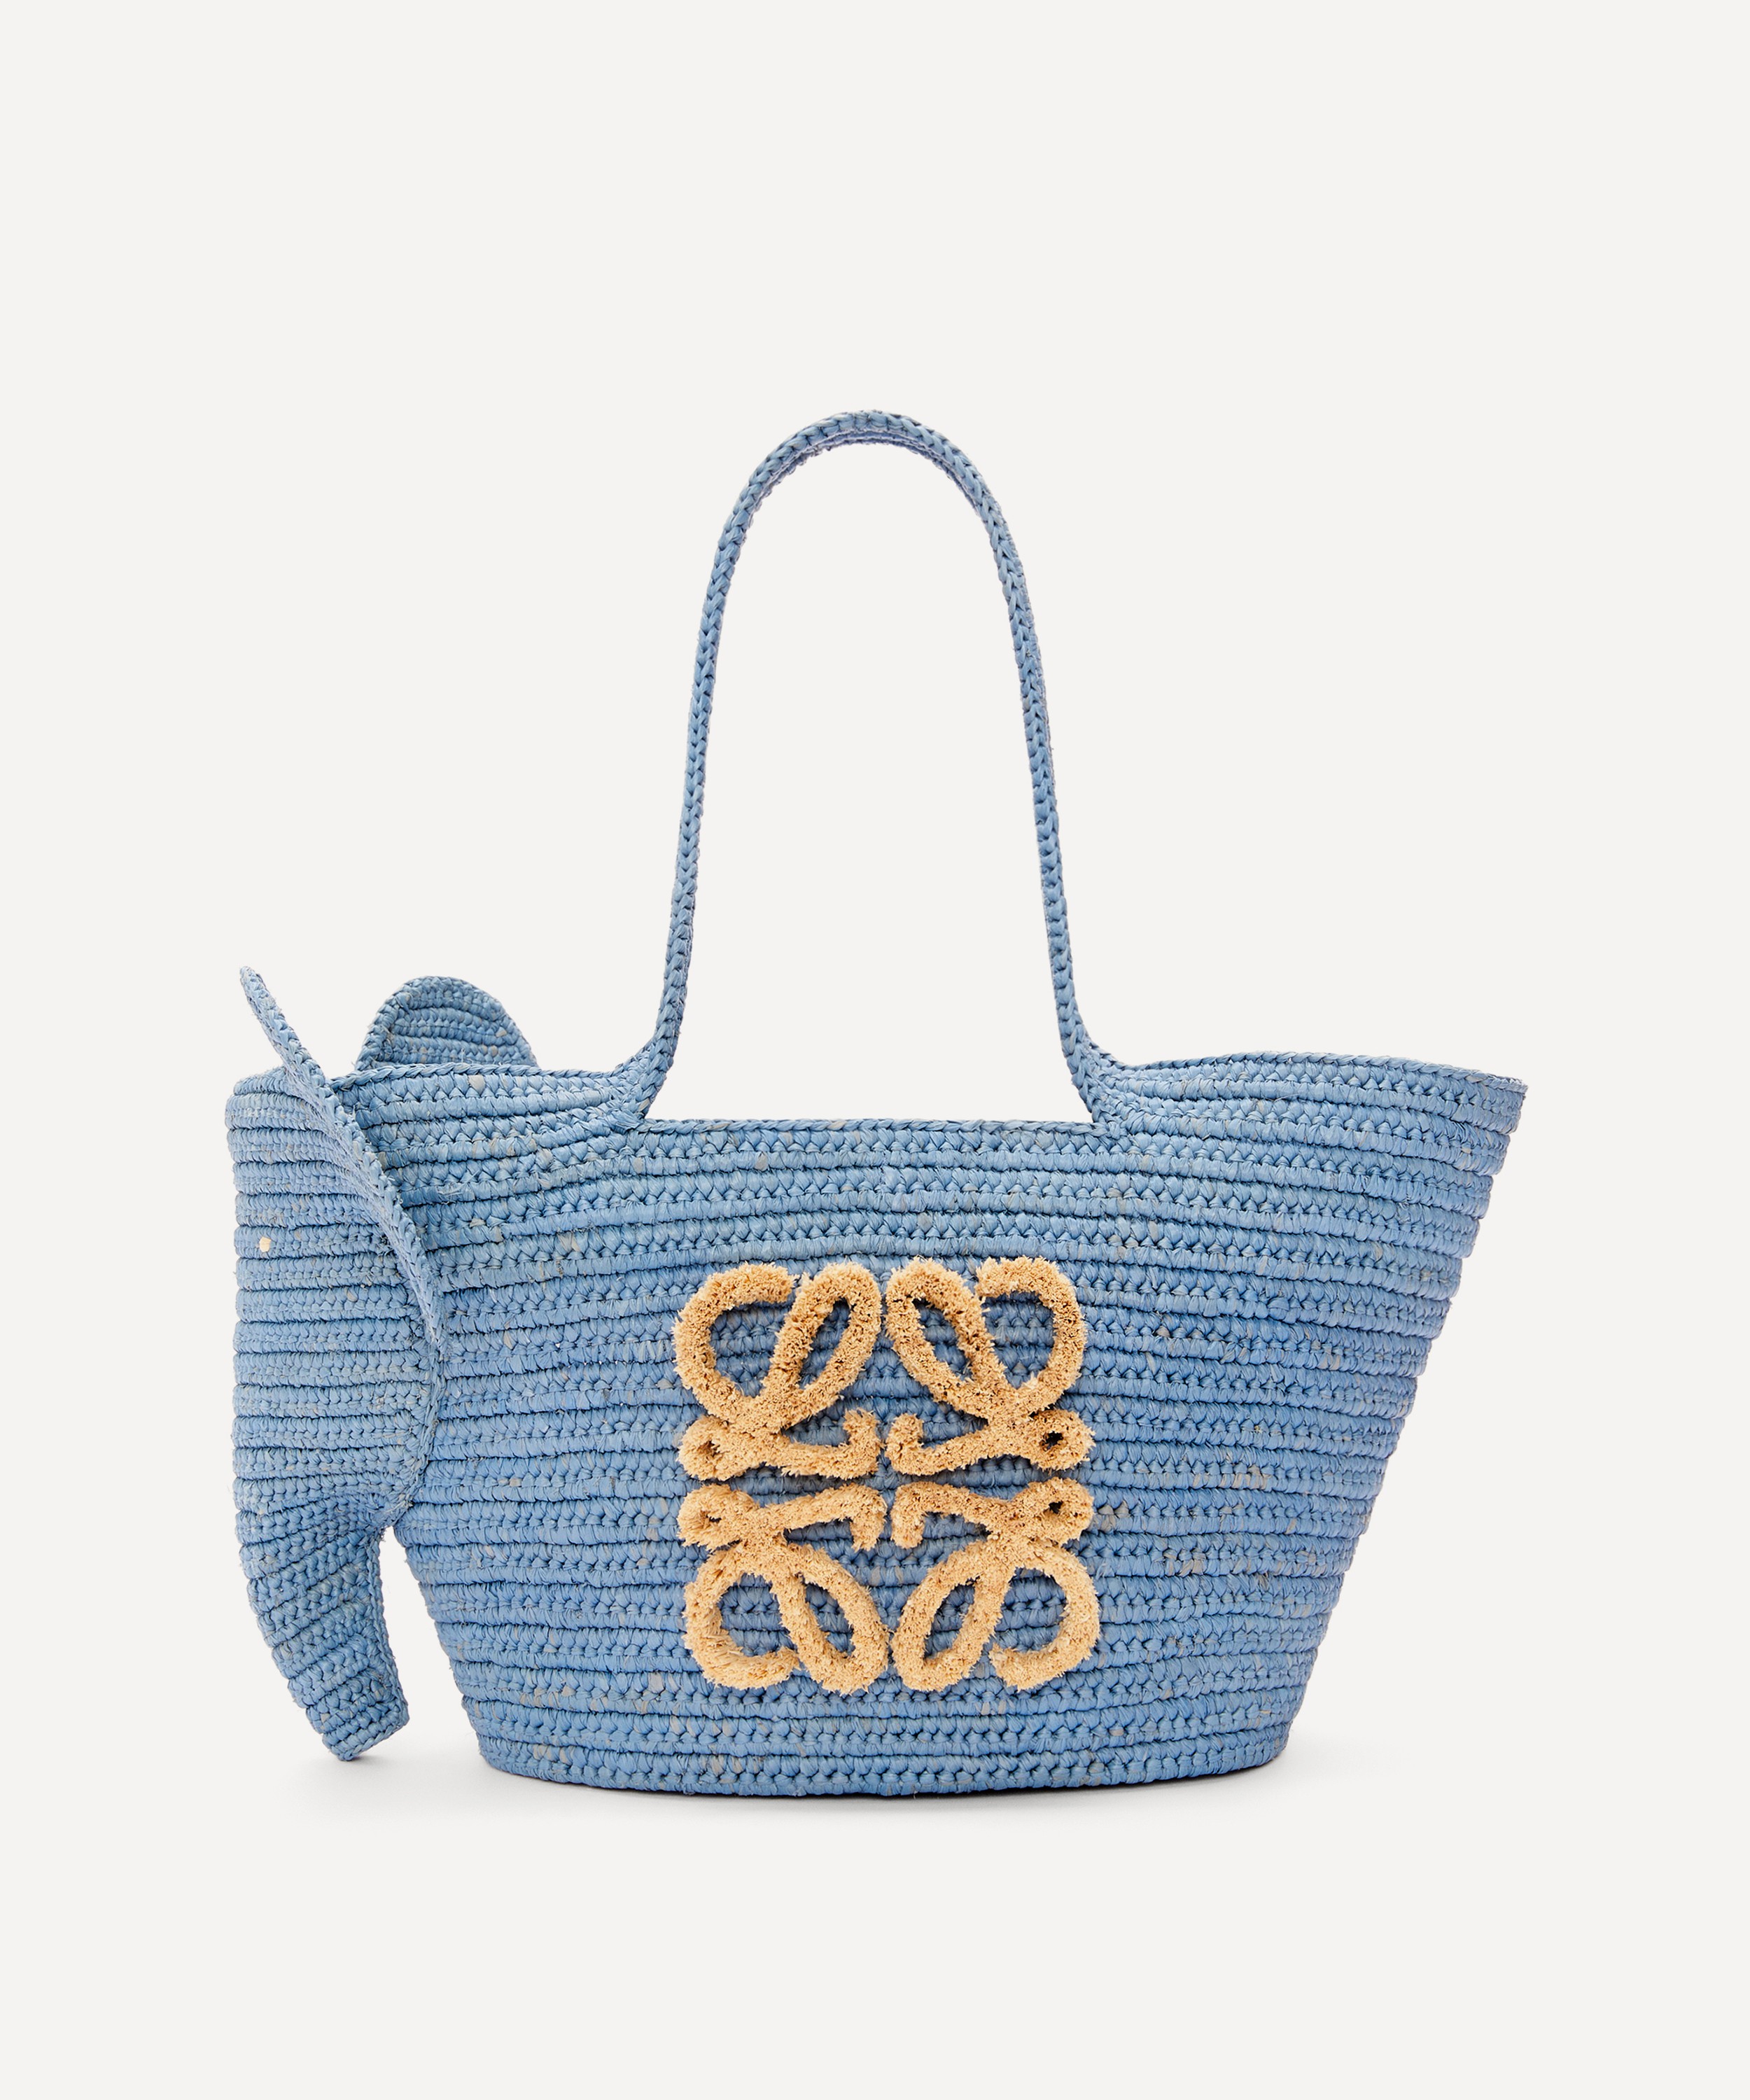 Loewe x Paula Ibiza Bags, our Basket Bag collection